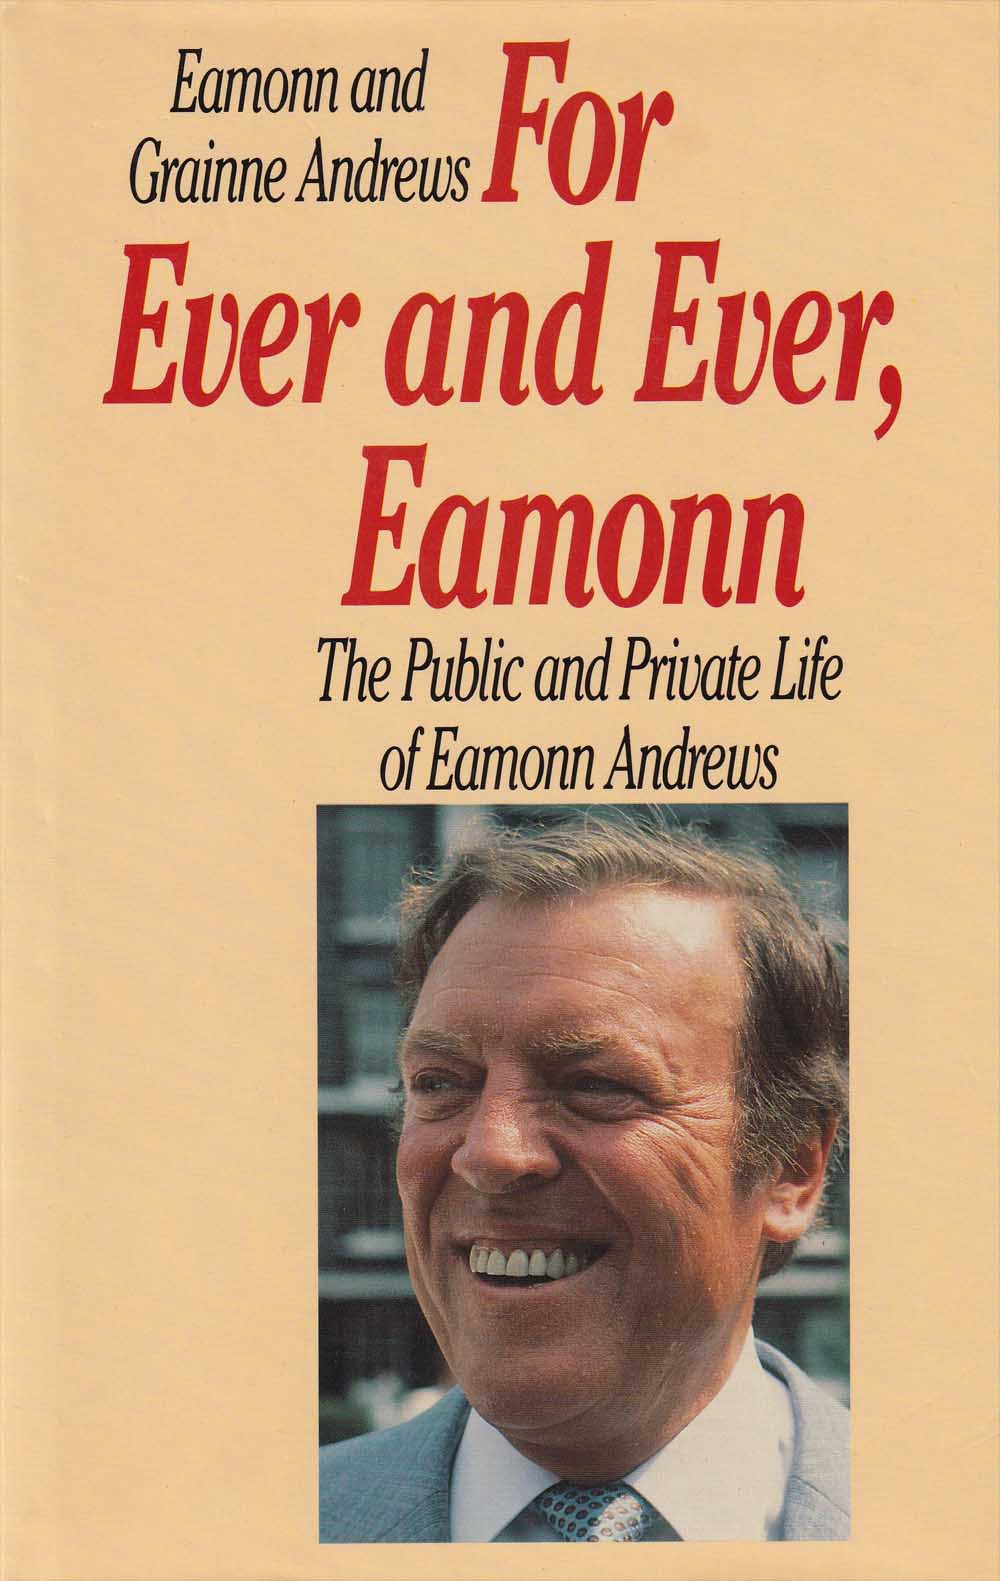 Eamonn Andrews biography